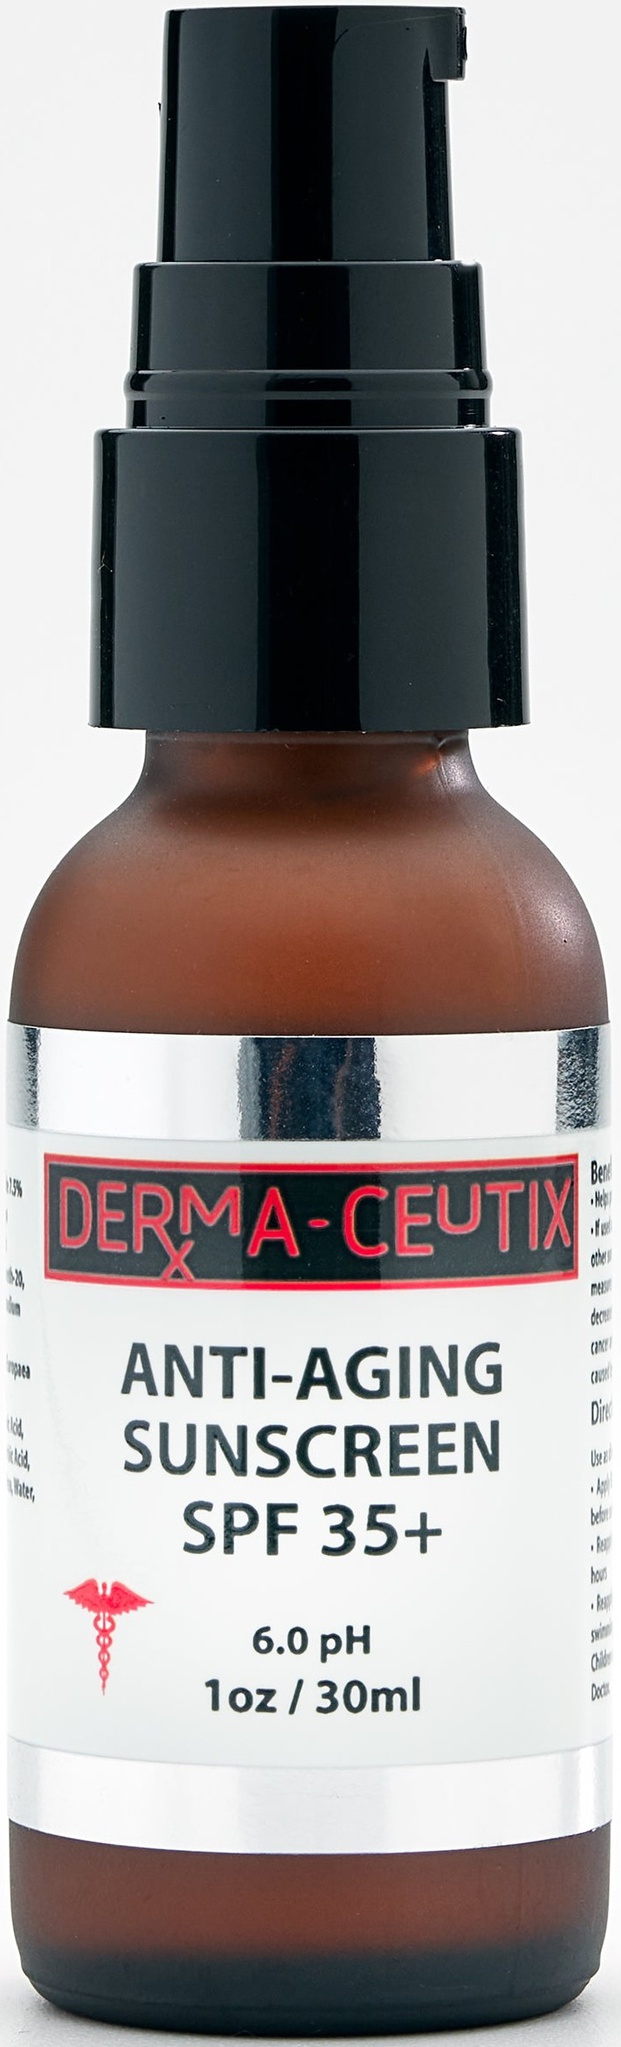 Derma-ceutix Anti-Aging Sunscreen SPF 35+